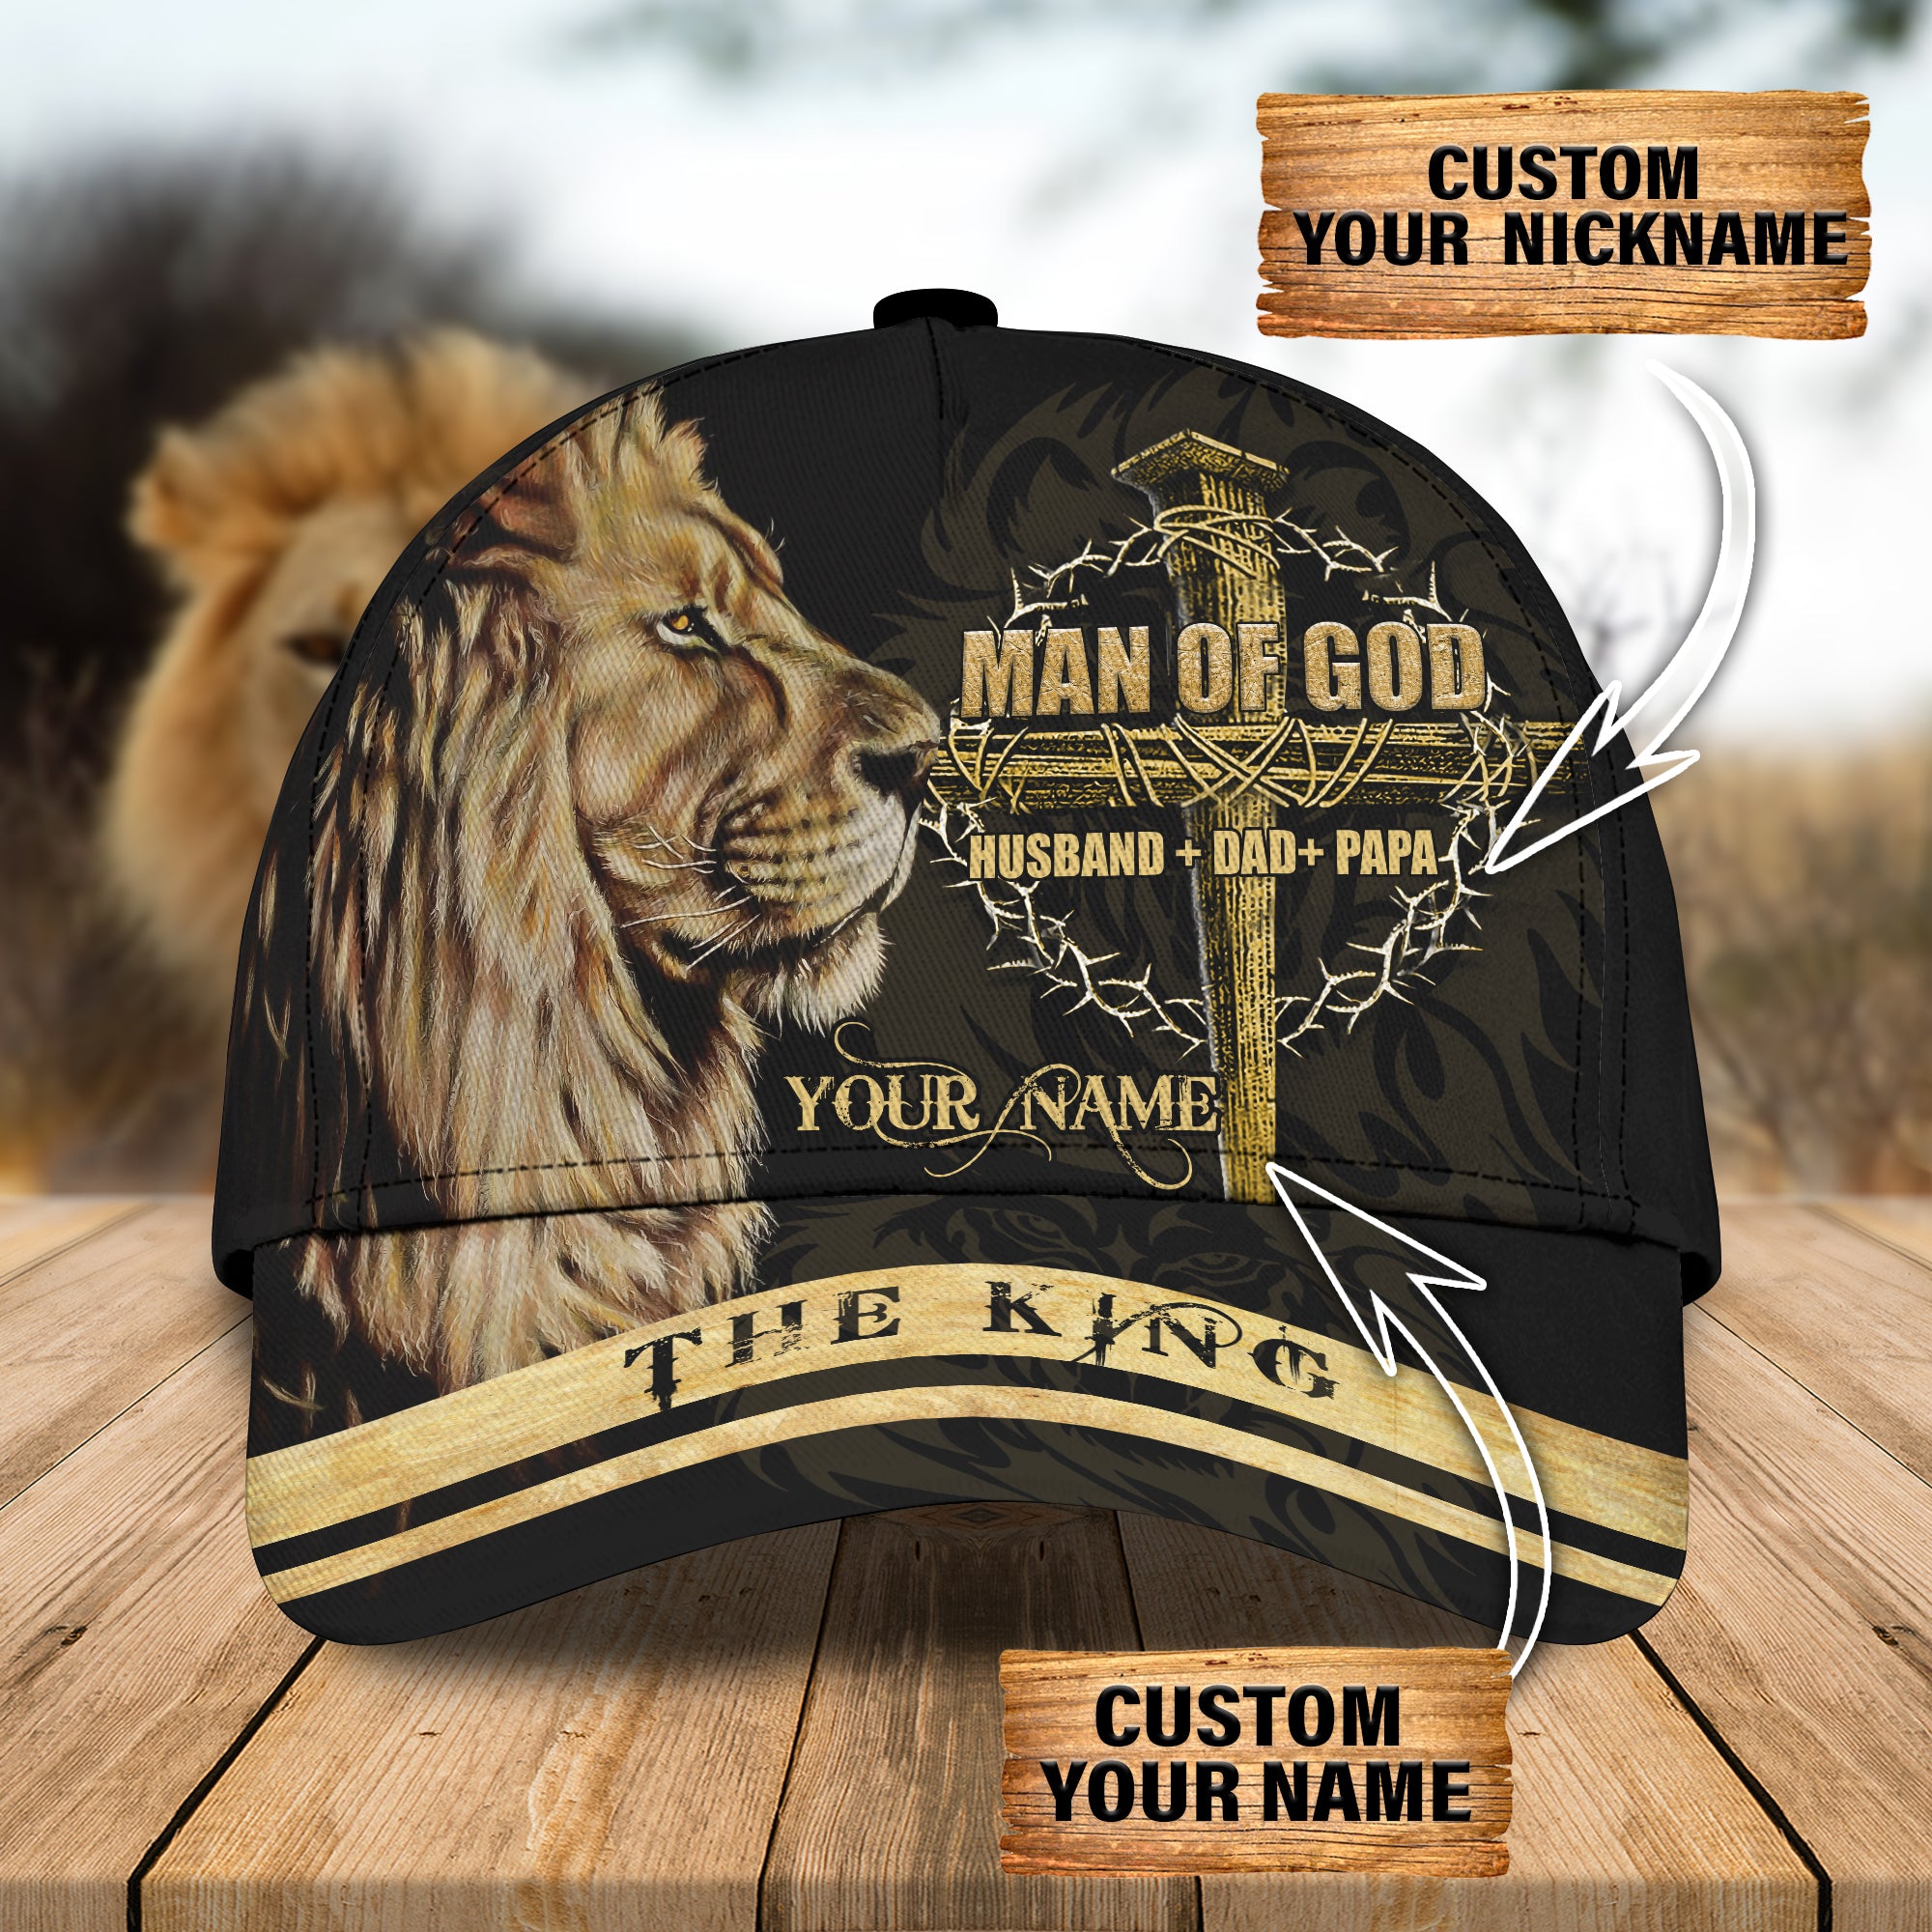 Man Of God - Personalized Name Cap 17 - Bhn97 2